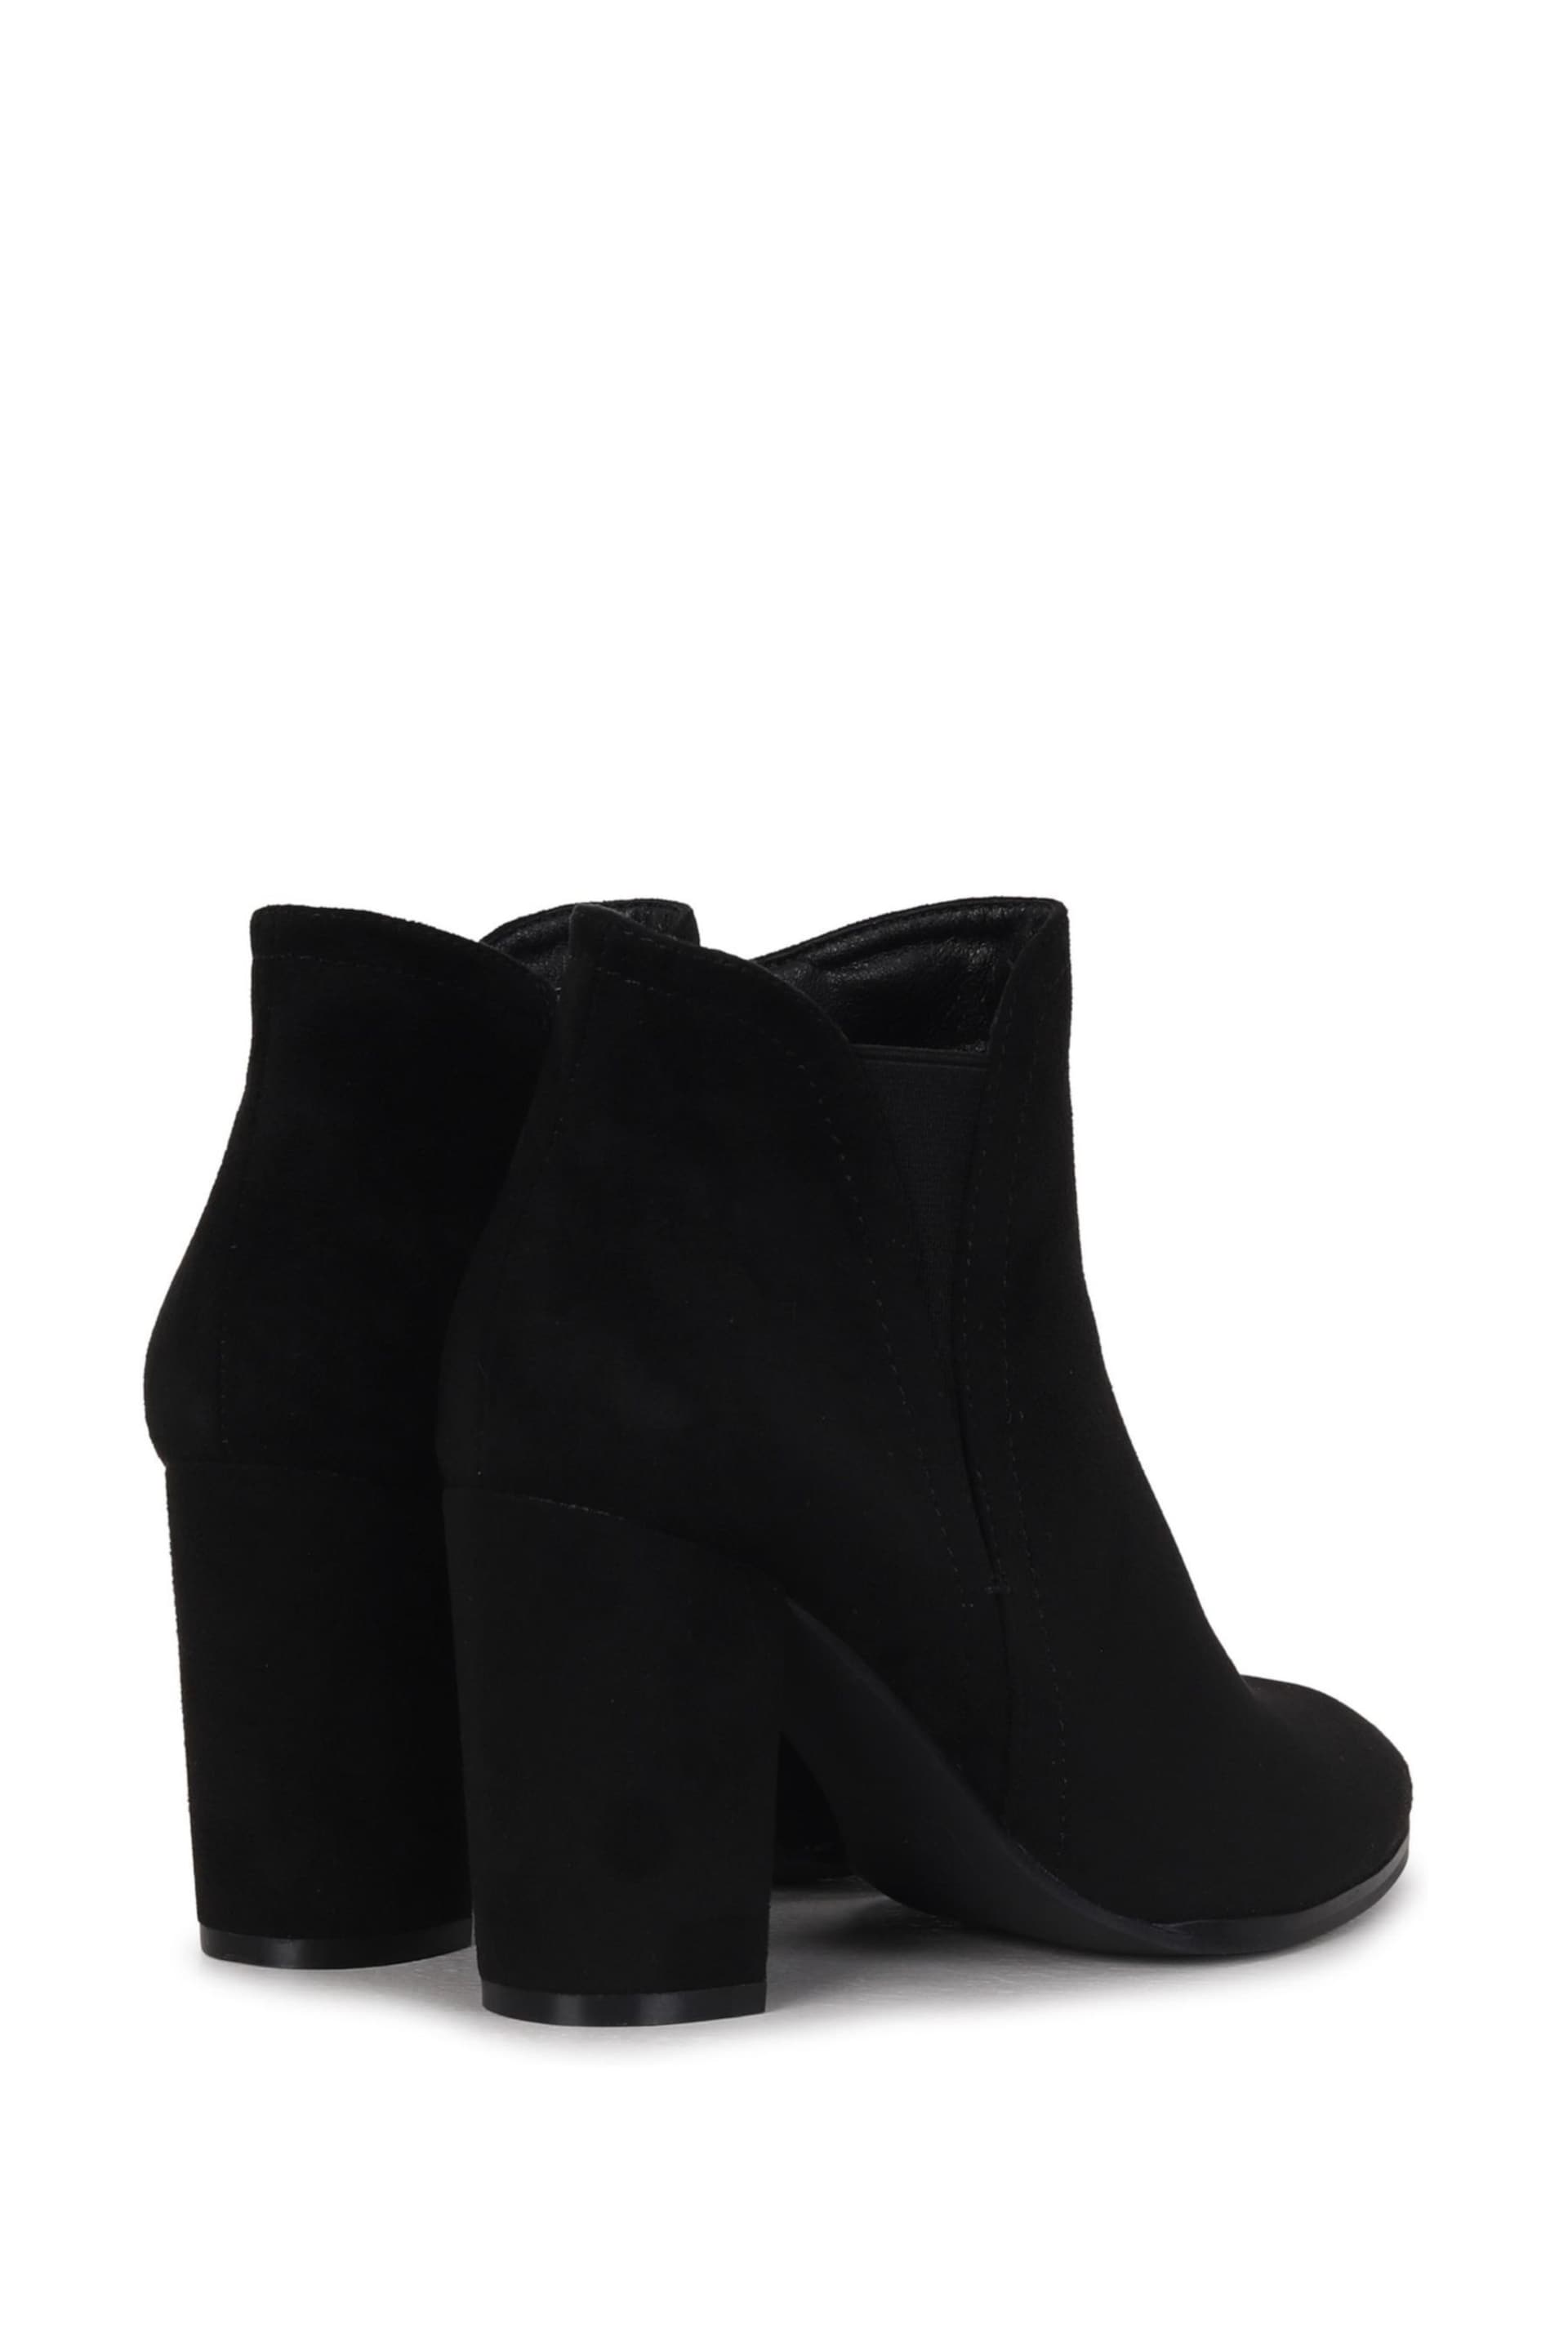 Linzi Black Freda Block Heeled Ankle Boots - Image 4 of 4